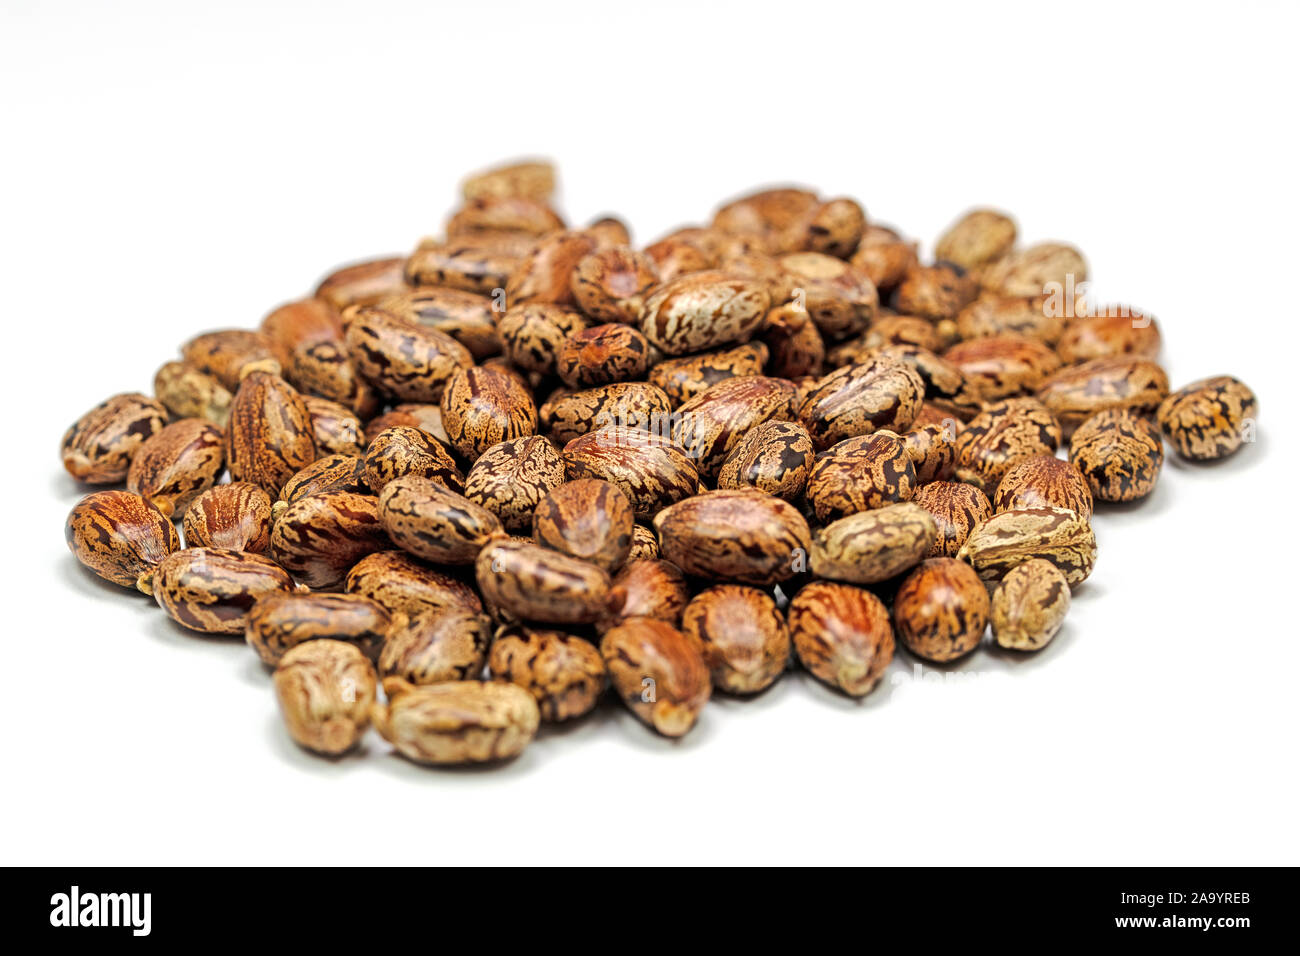 Seeds of the castor tree, ricinus communis, Stock Photo